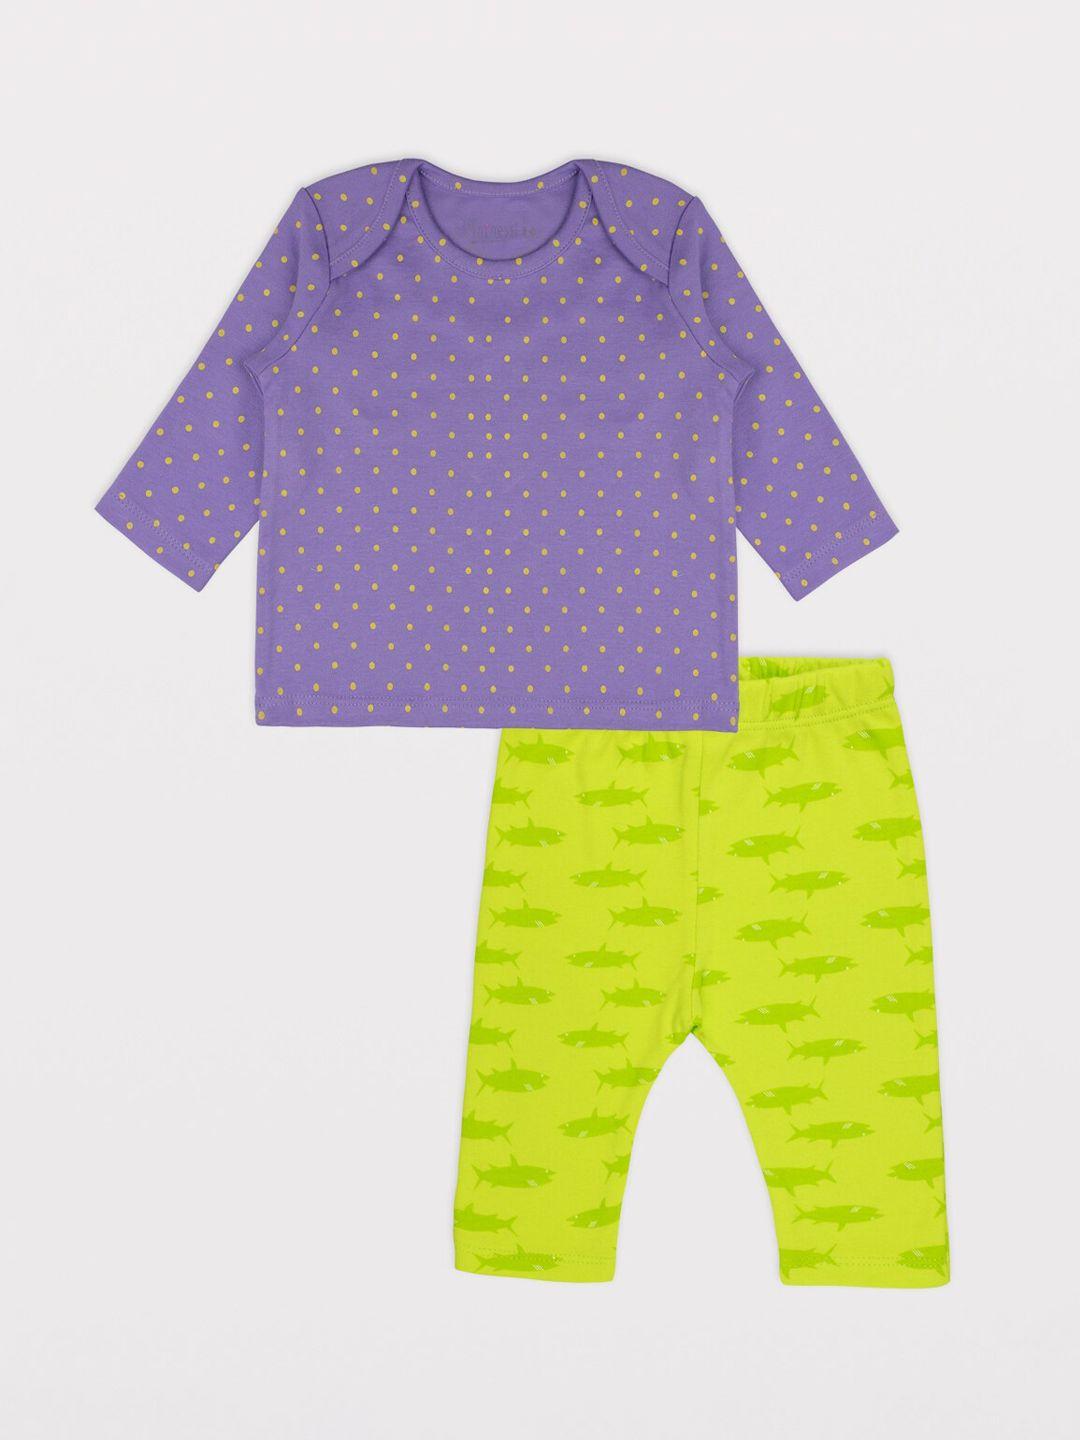 playness unisex kids purple & green printed night suit